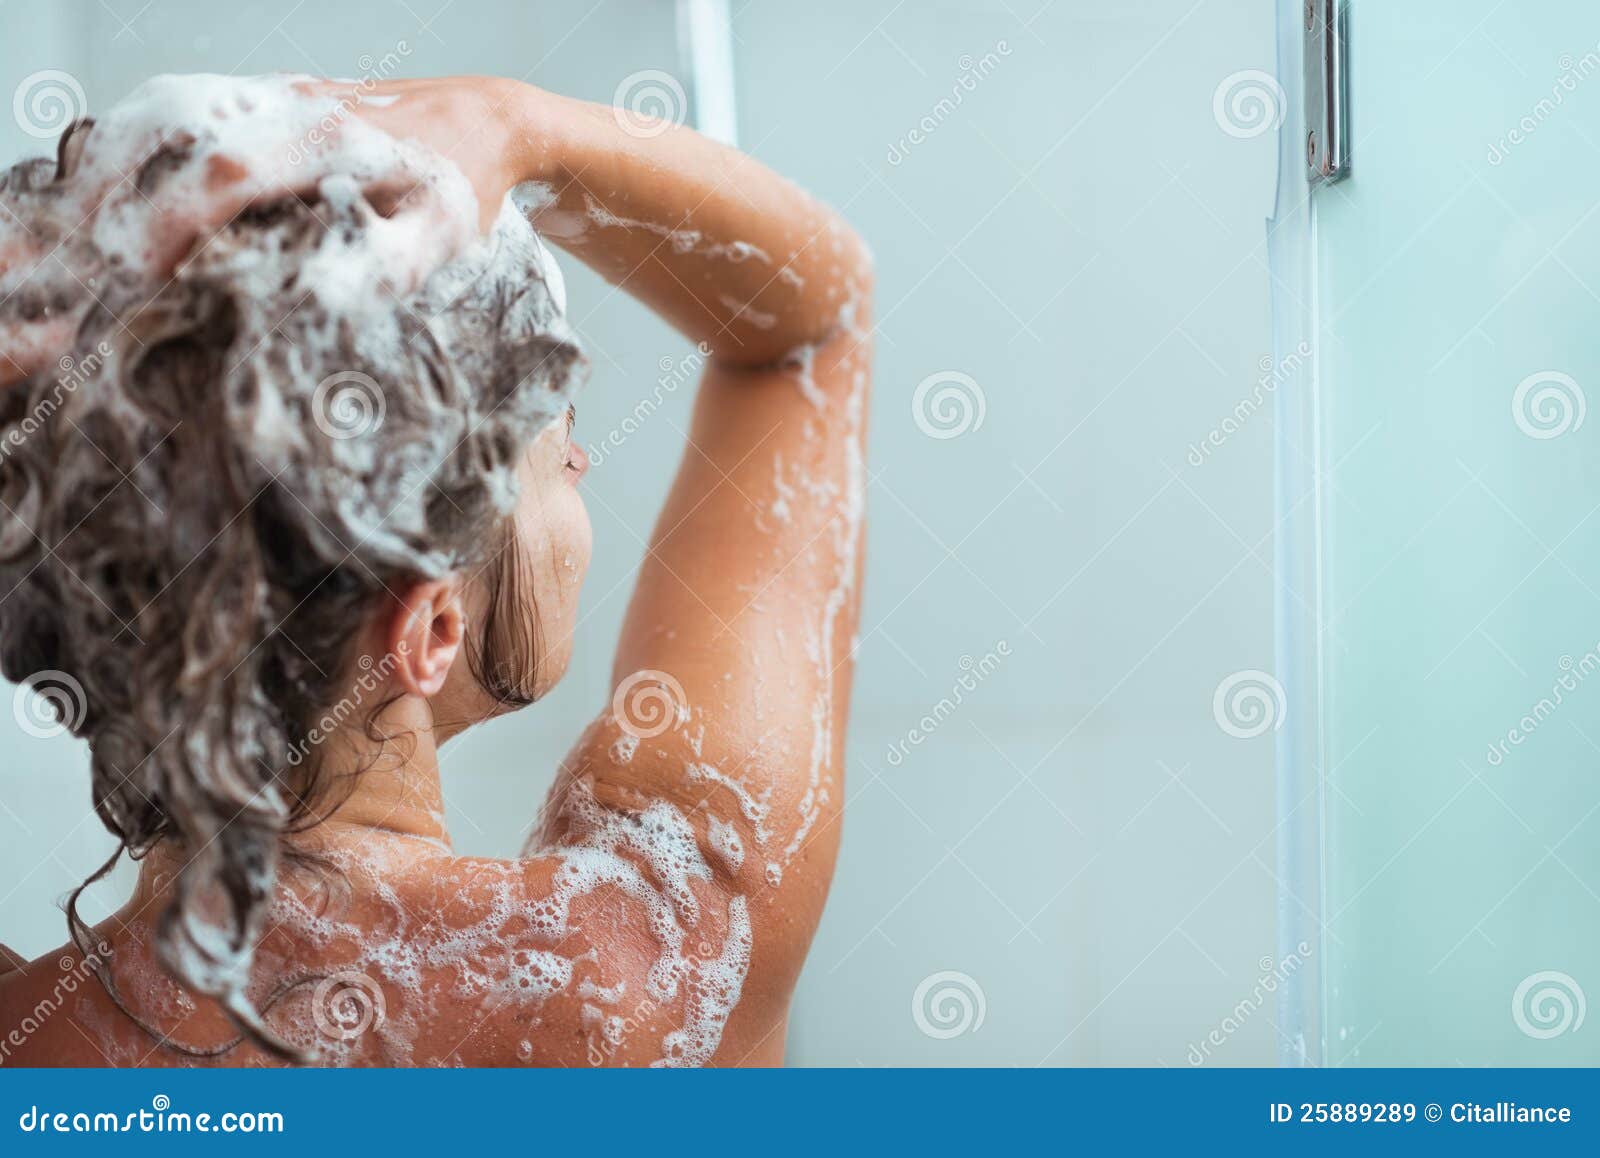 woman applying shampoo in shower